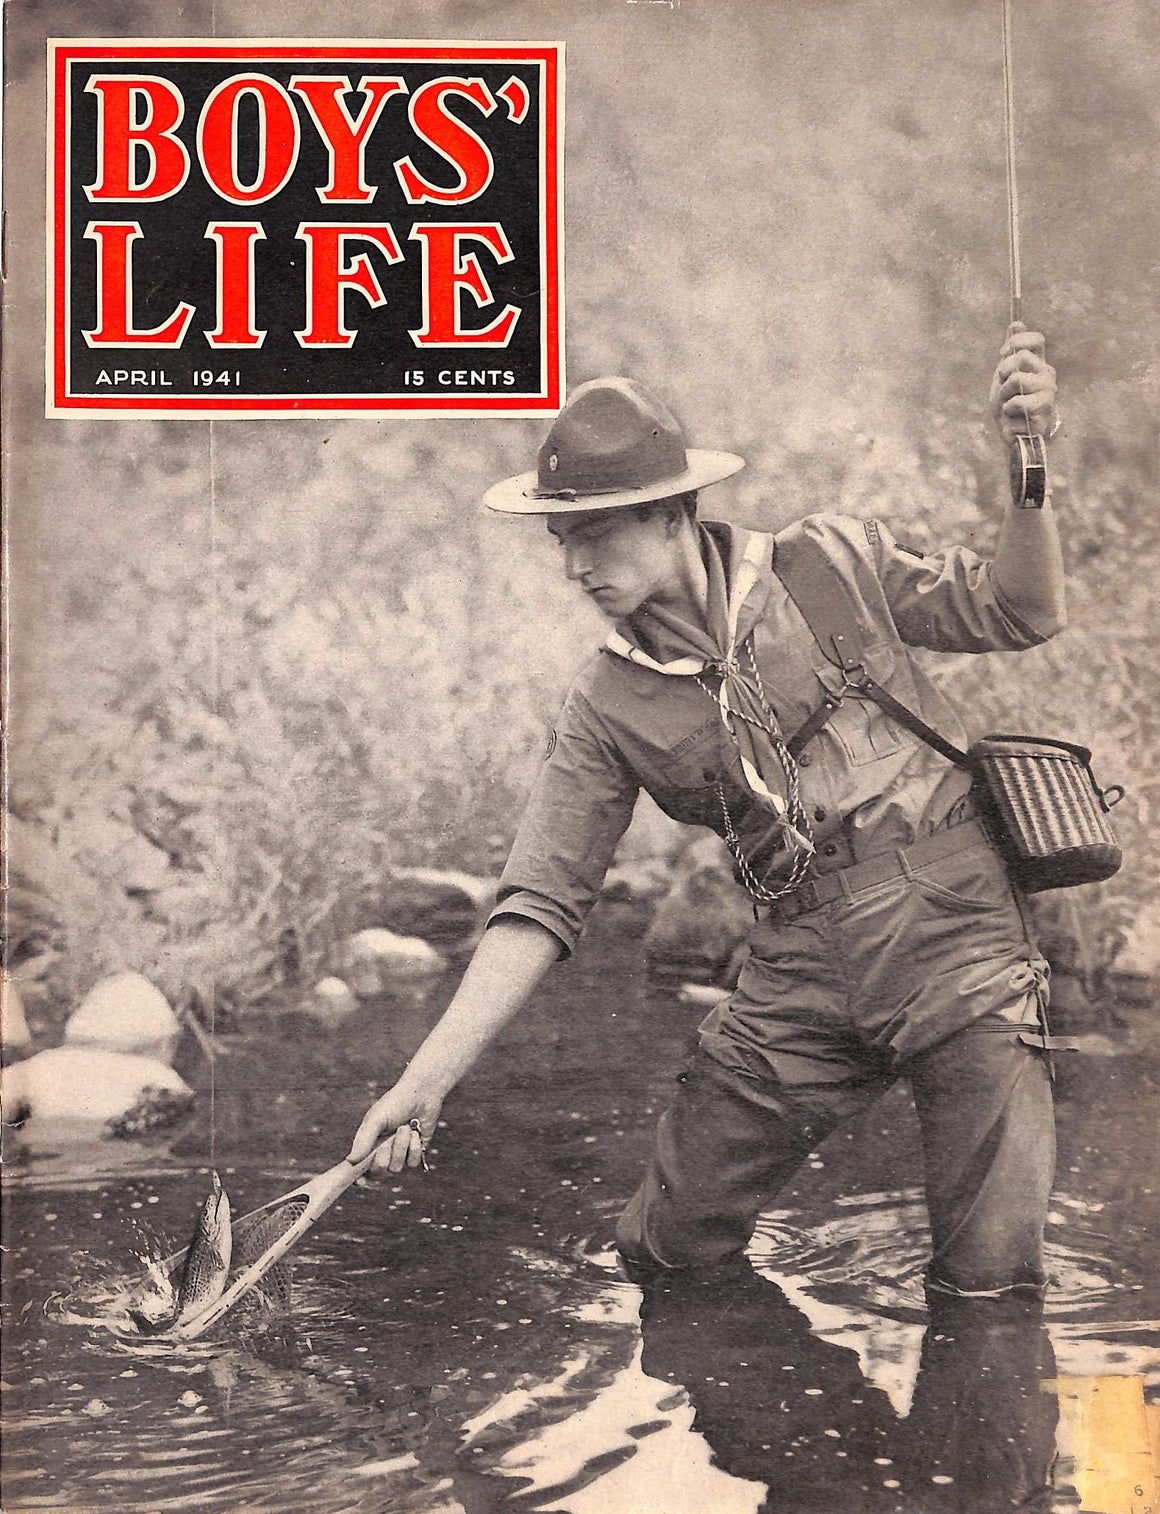 "Boys' Life: April 1941"